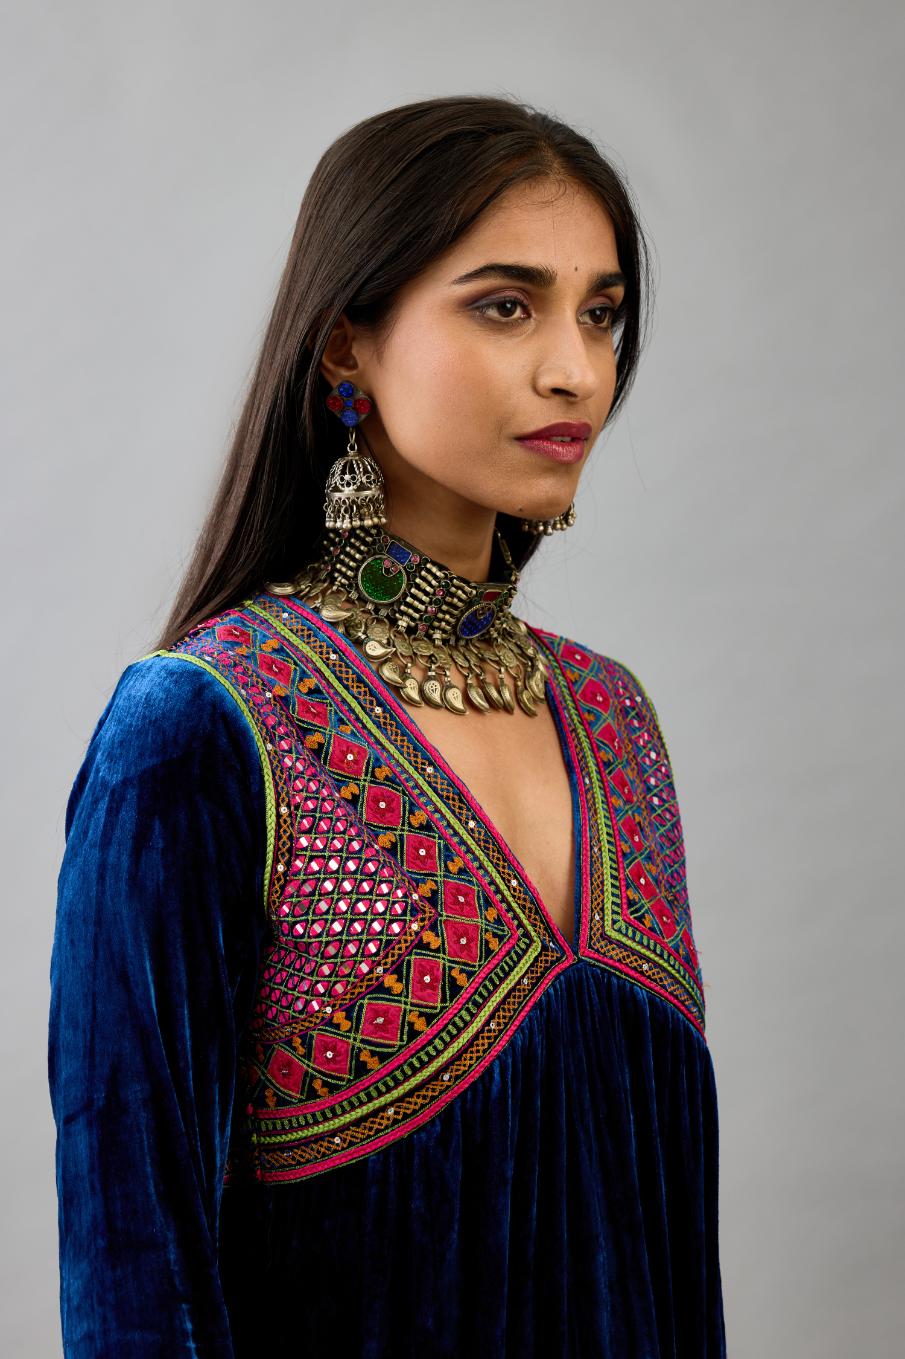 Blue silk velvet embroidered kurta dress with V neck, yoke and fine gathers at empire line.